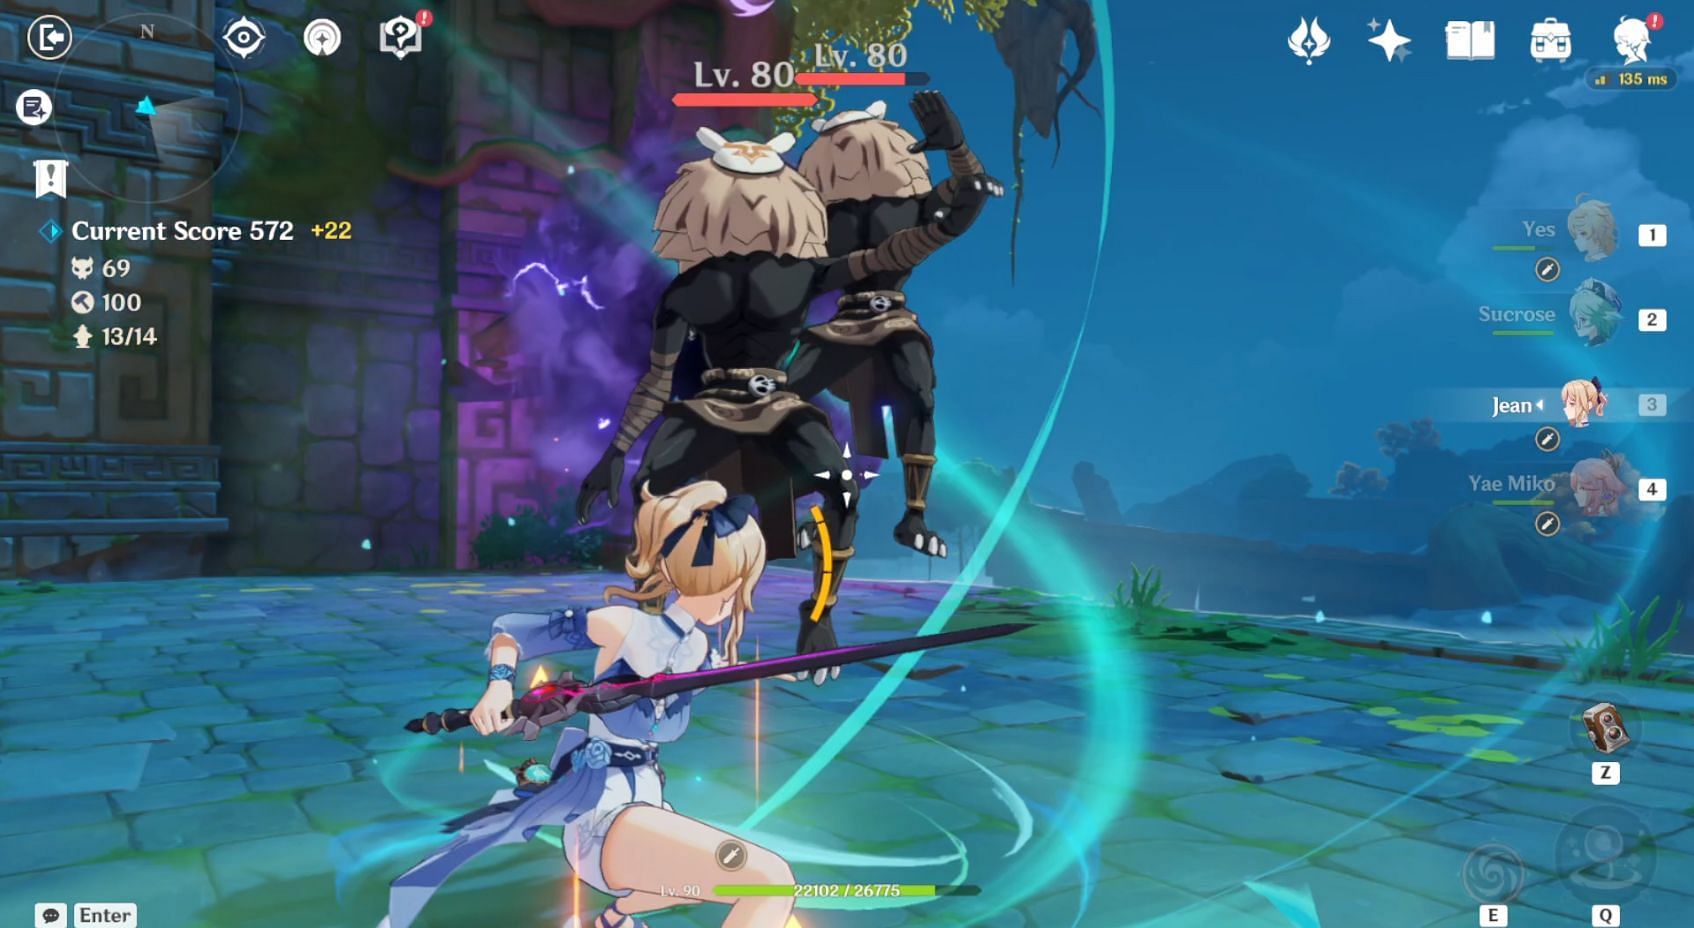 Jean throwing enemies in the air using Elemental Skill (Image via Genshin Impact)